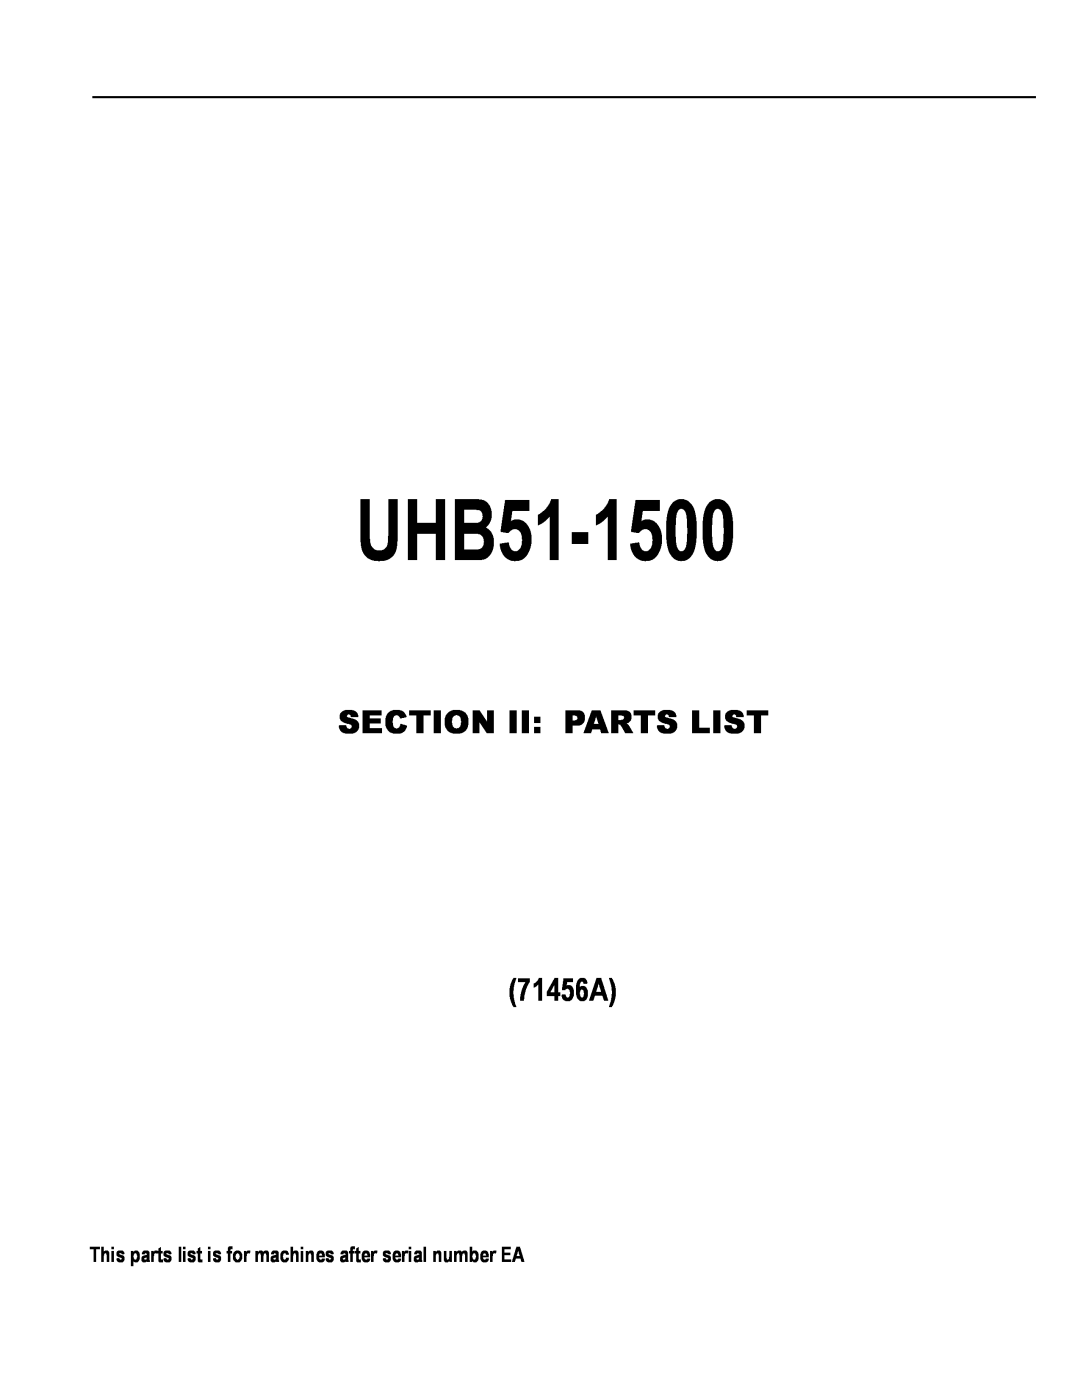 Nilfisk-Advance America 01610A manual SECTION II PARTS LIST 71456A, UHB51-1500 